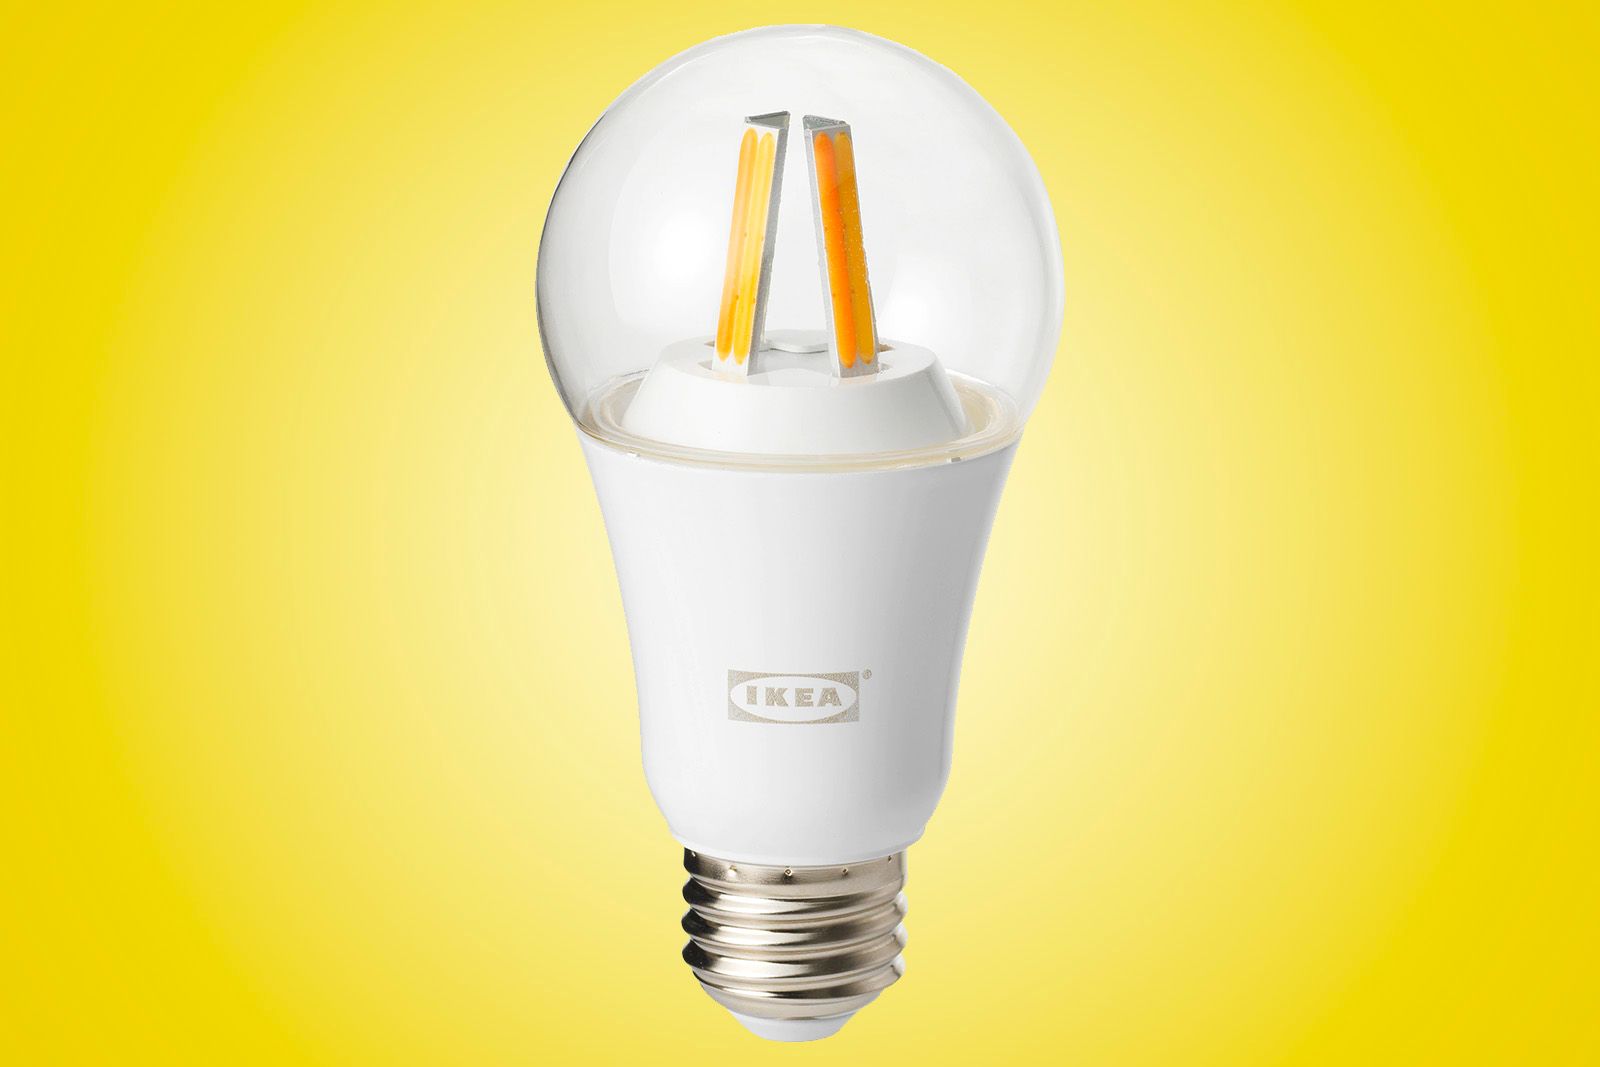 Ikea updates Tradfri smart lighting range with new bulbs and starter kit image 1